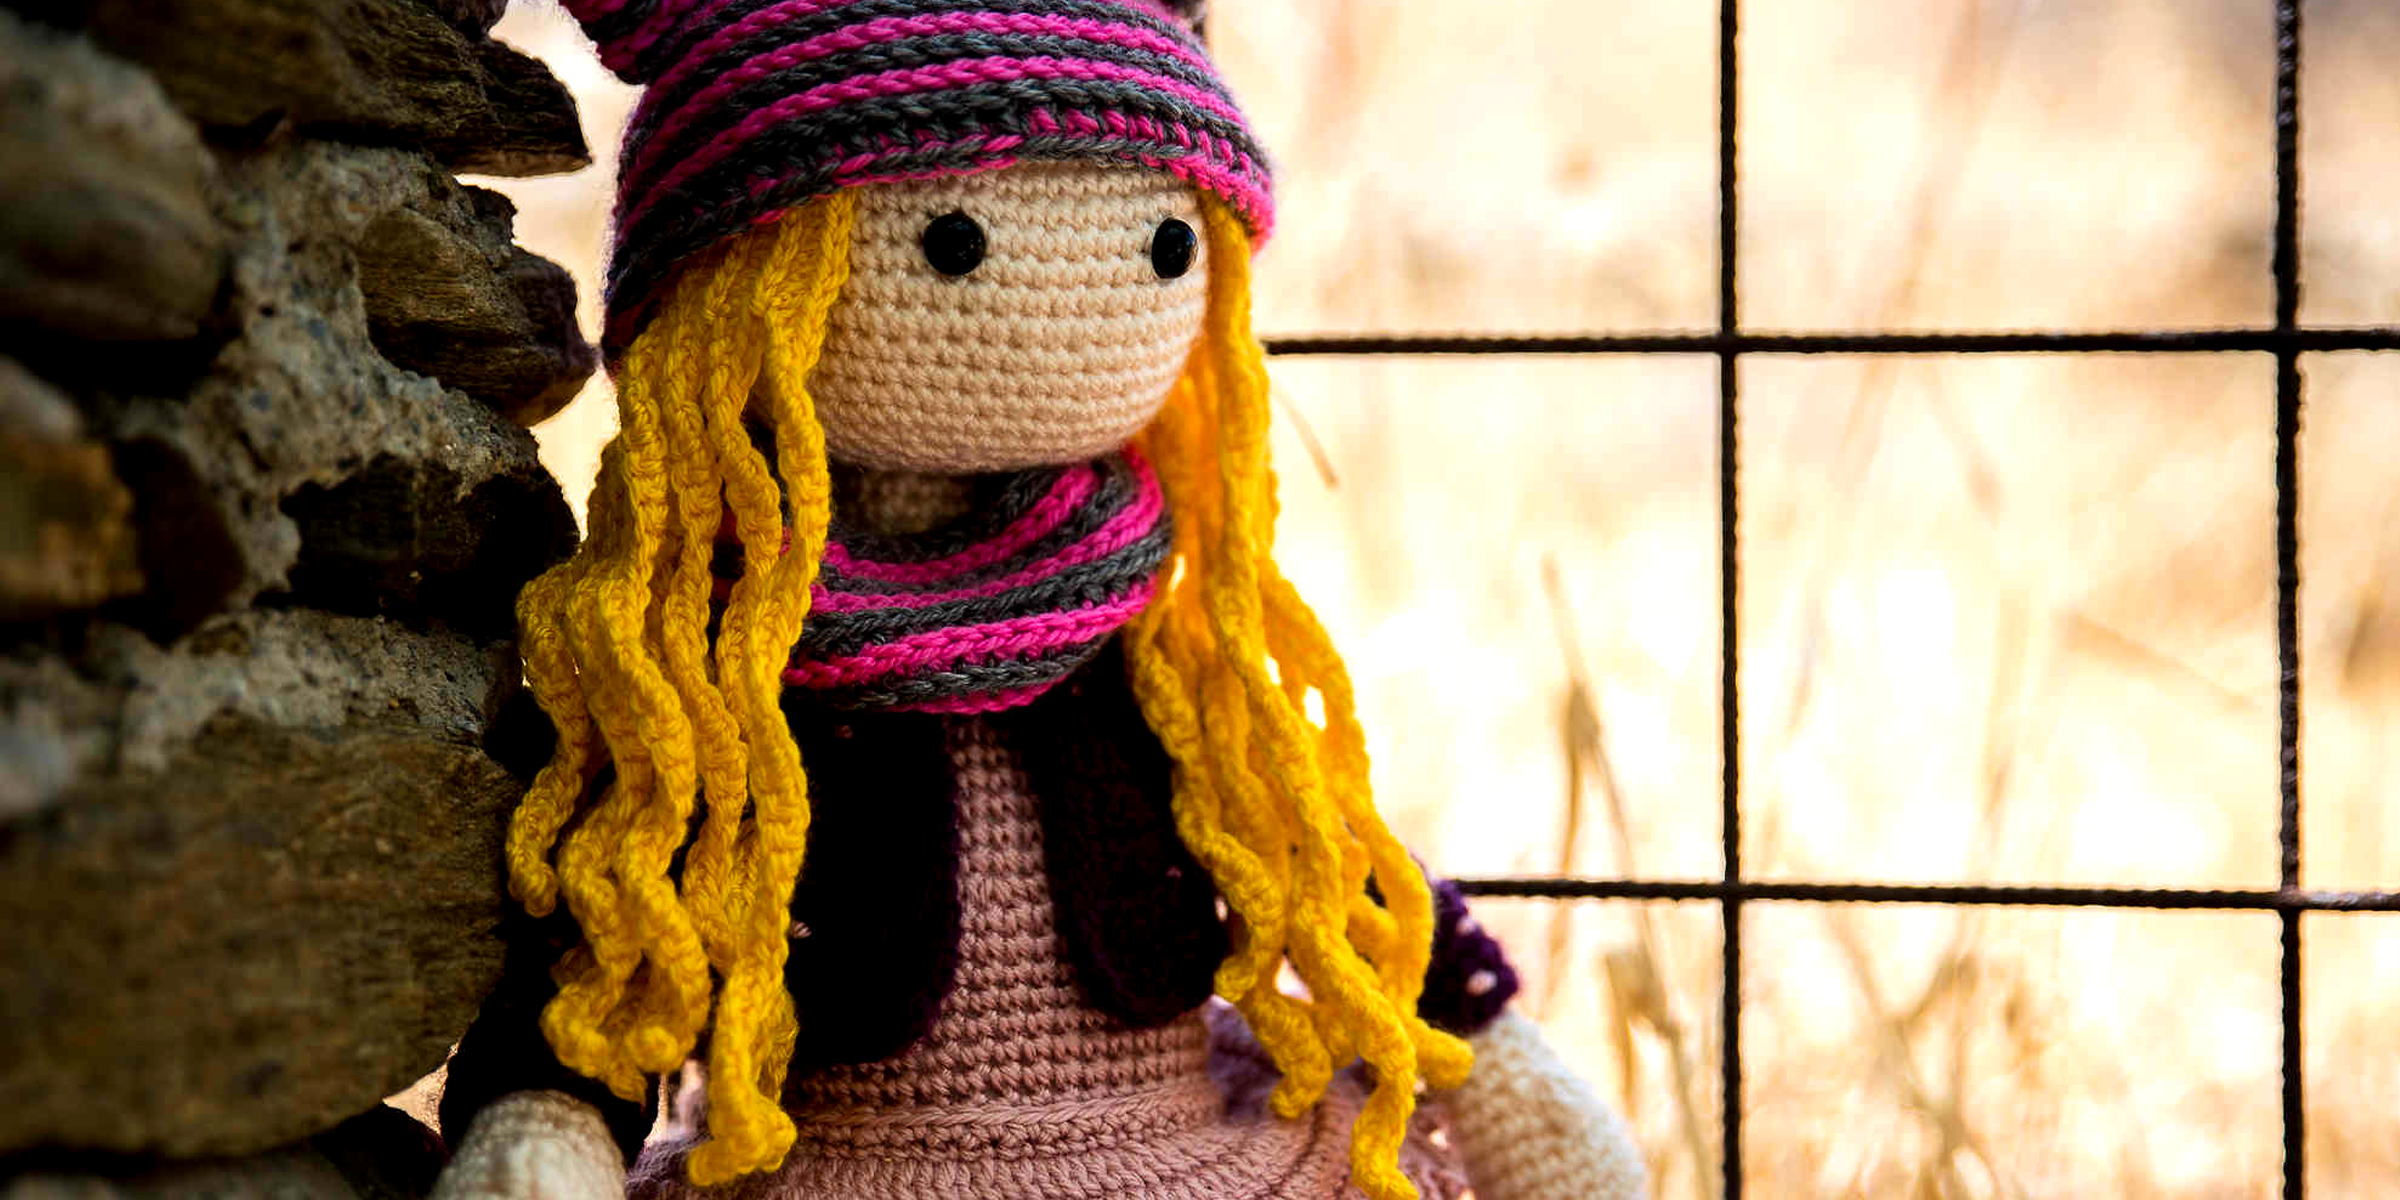 A crochet doll | Source: Flickr/Giacomo Gasperini/CC BY-SA 2.0